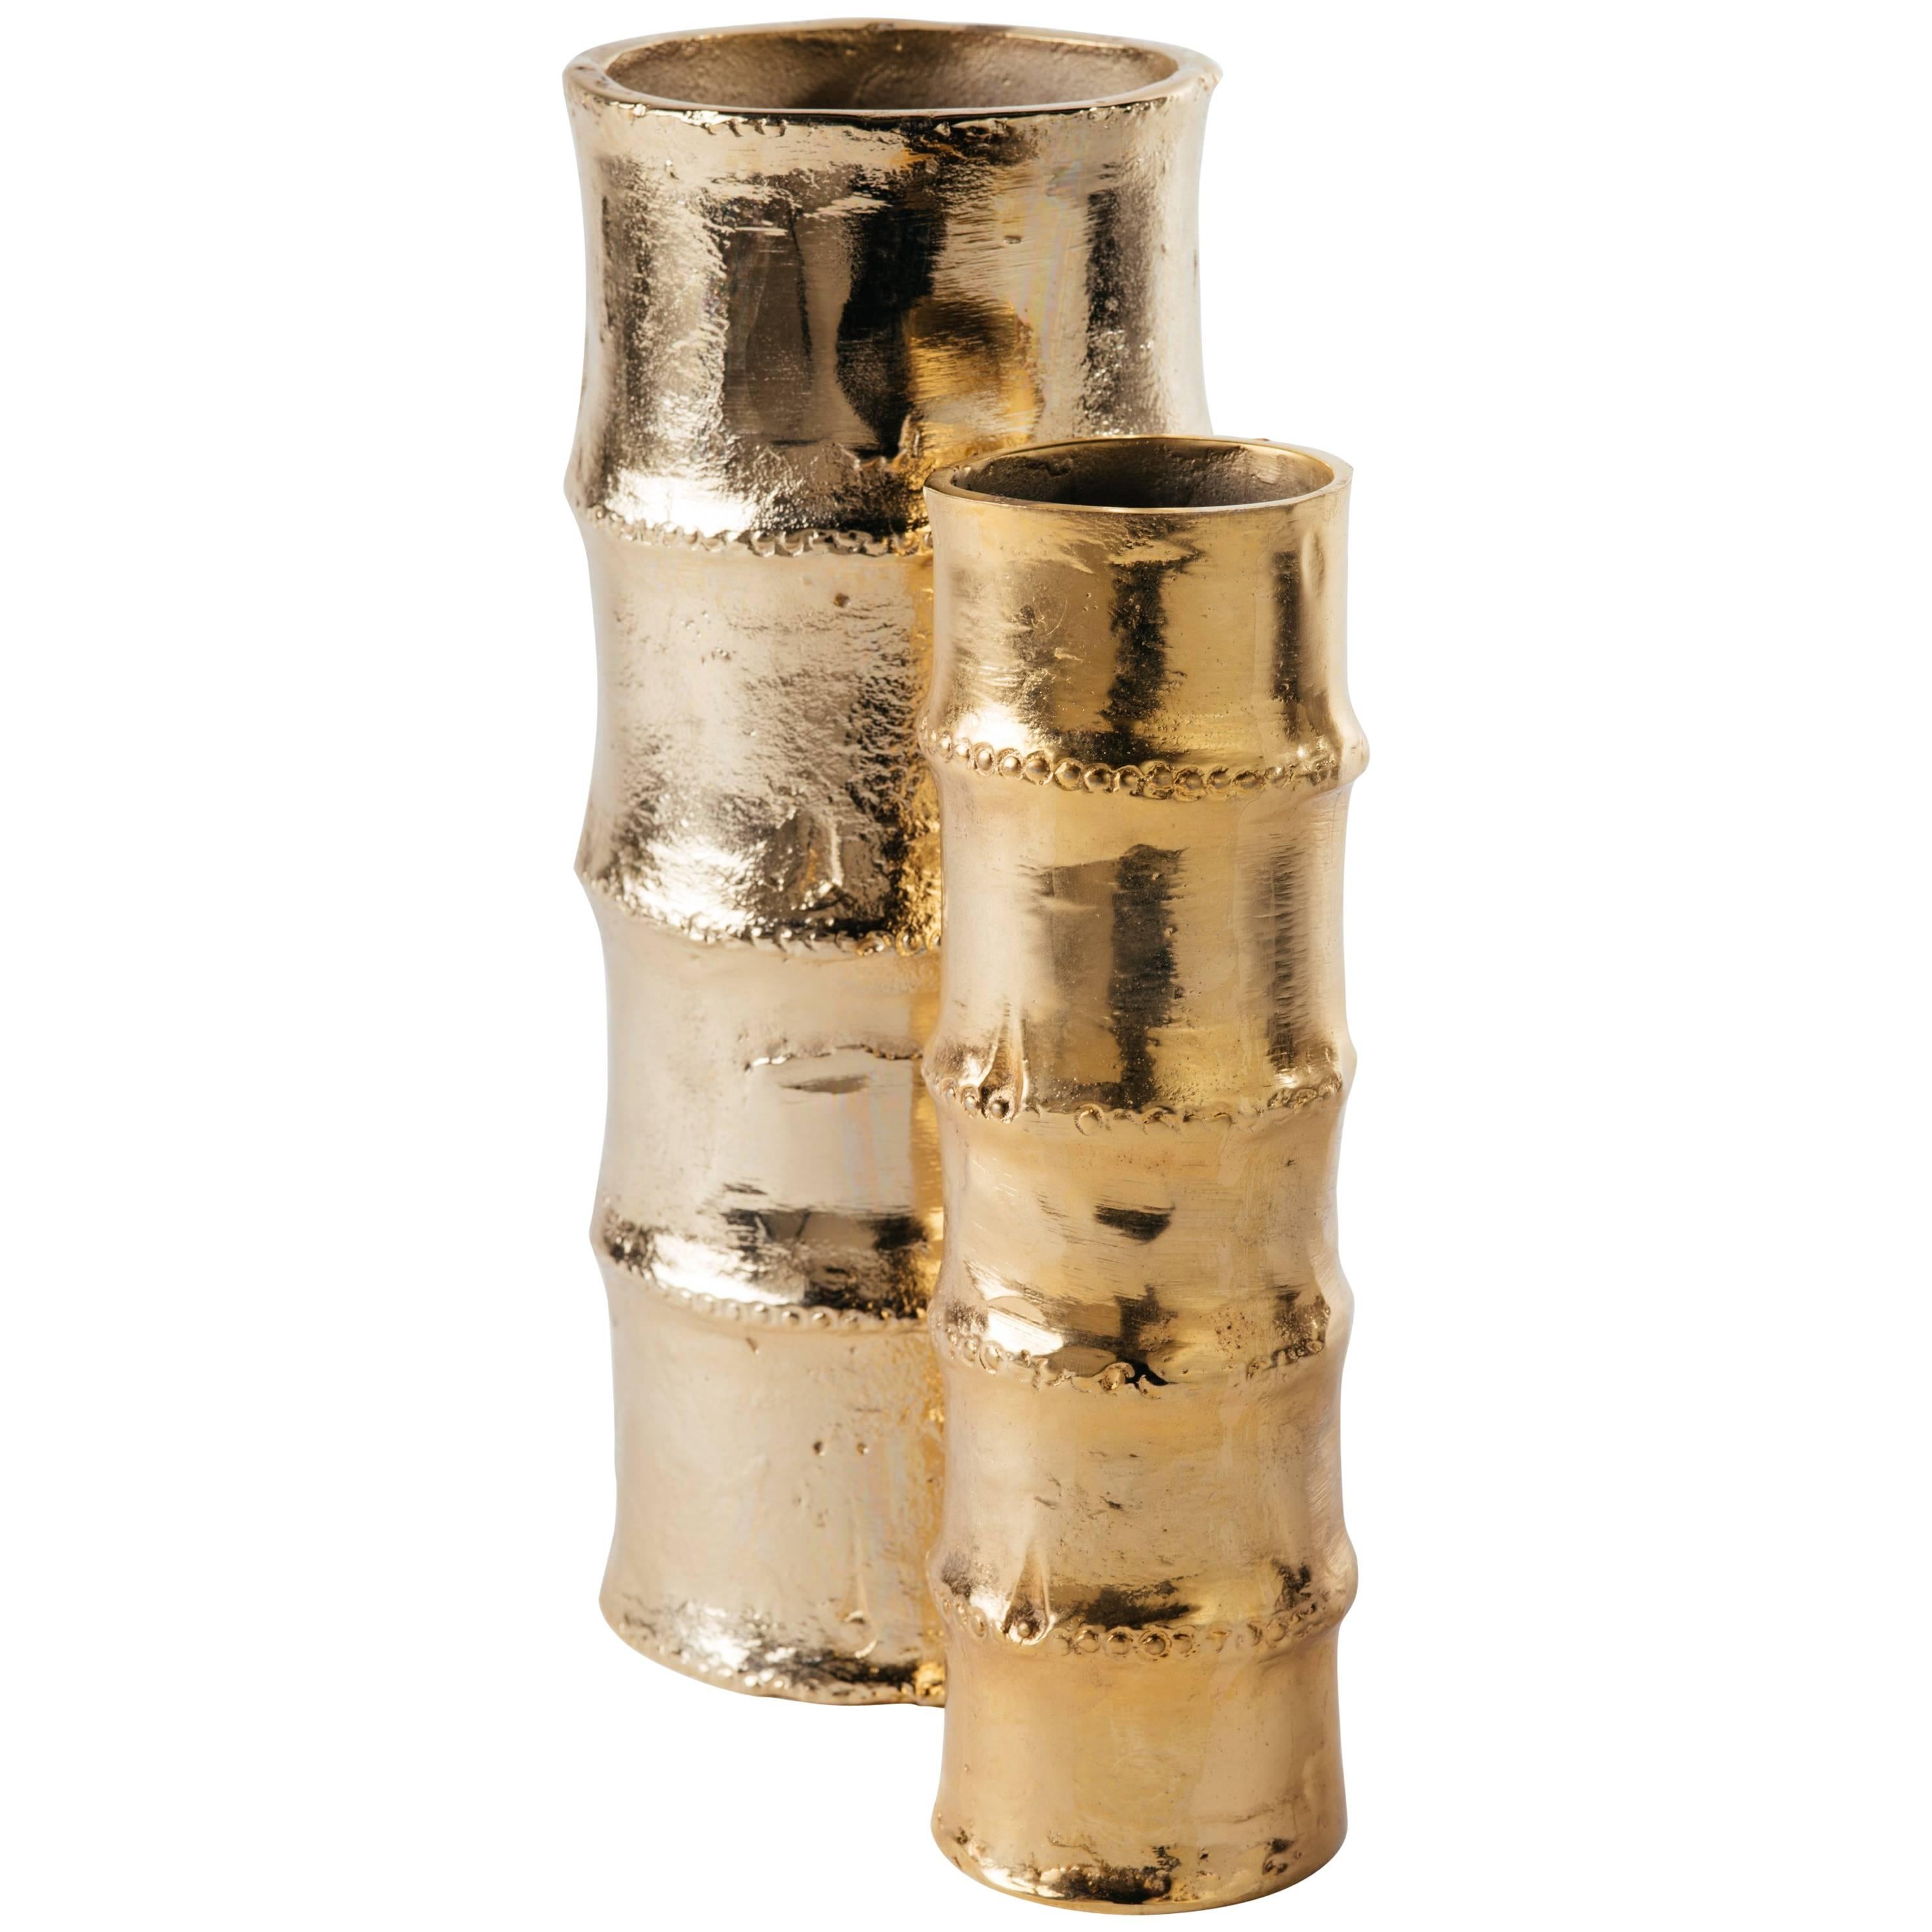 Pair of Handmade Bamboo Vases in 24-Karat Gold-Plated Metal